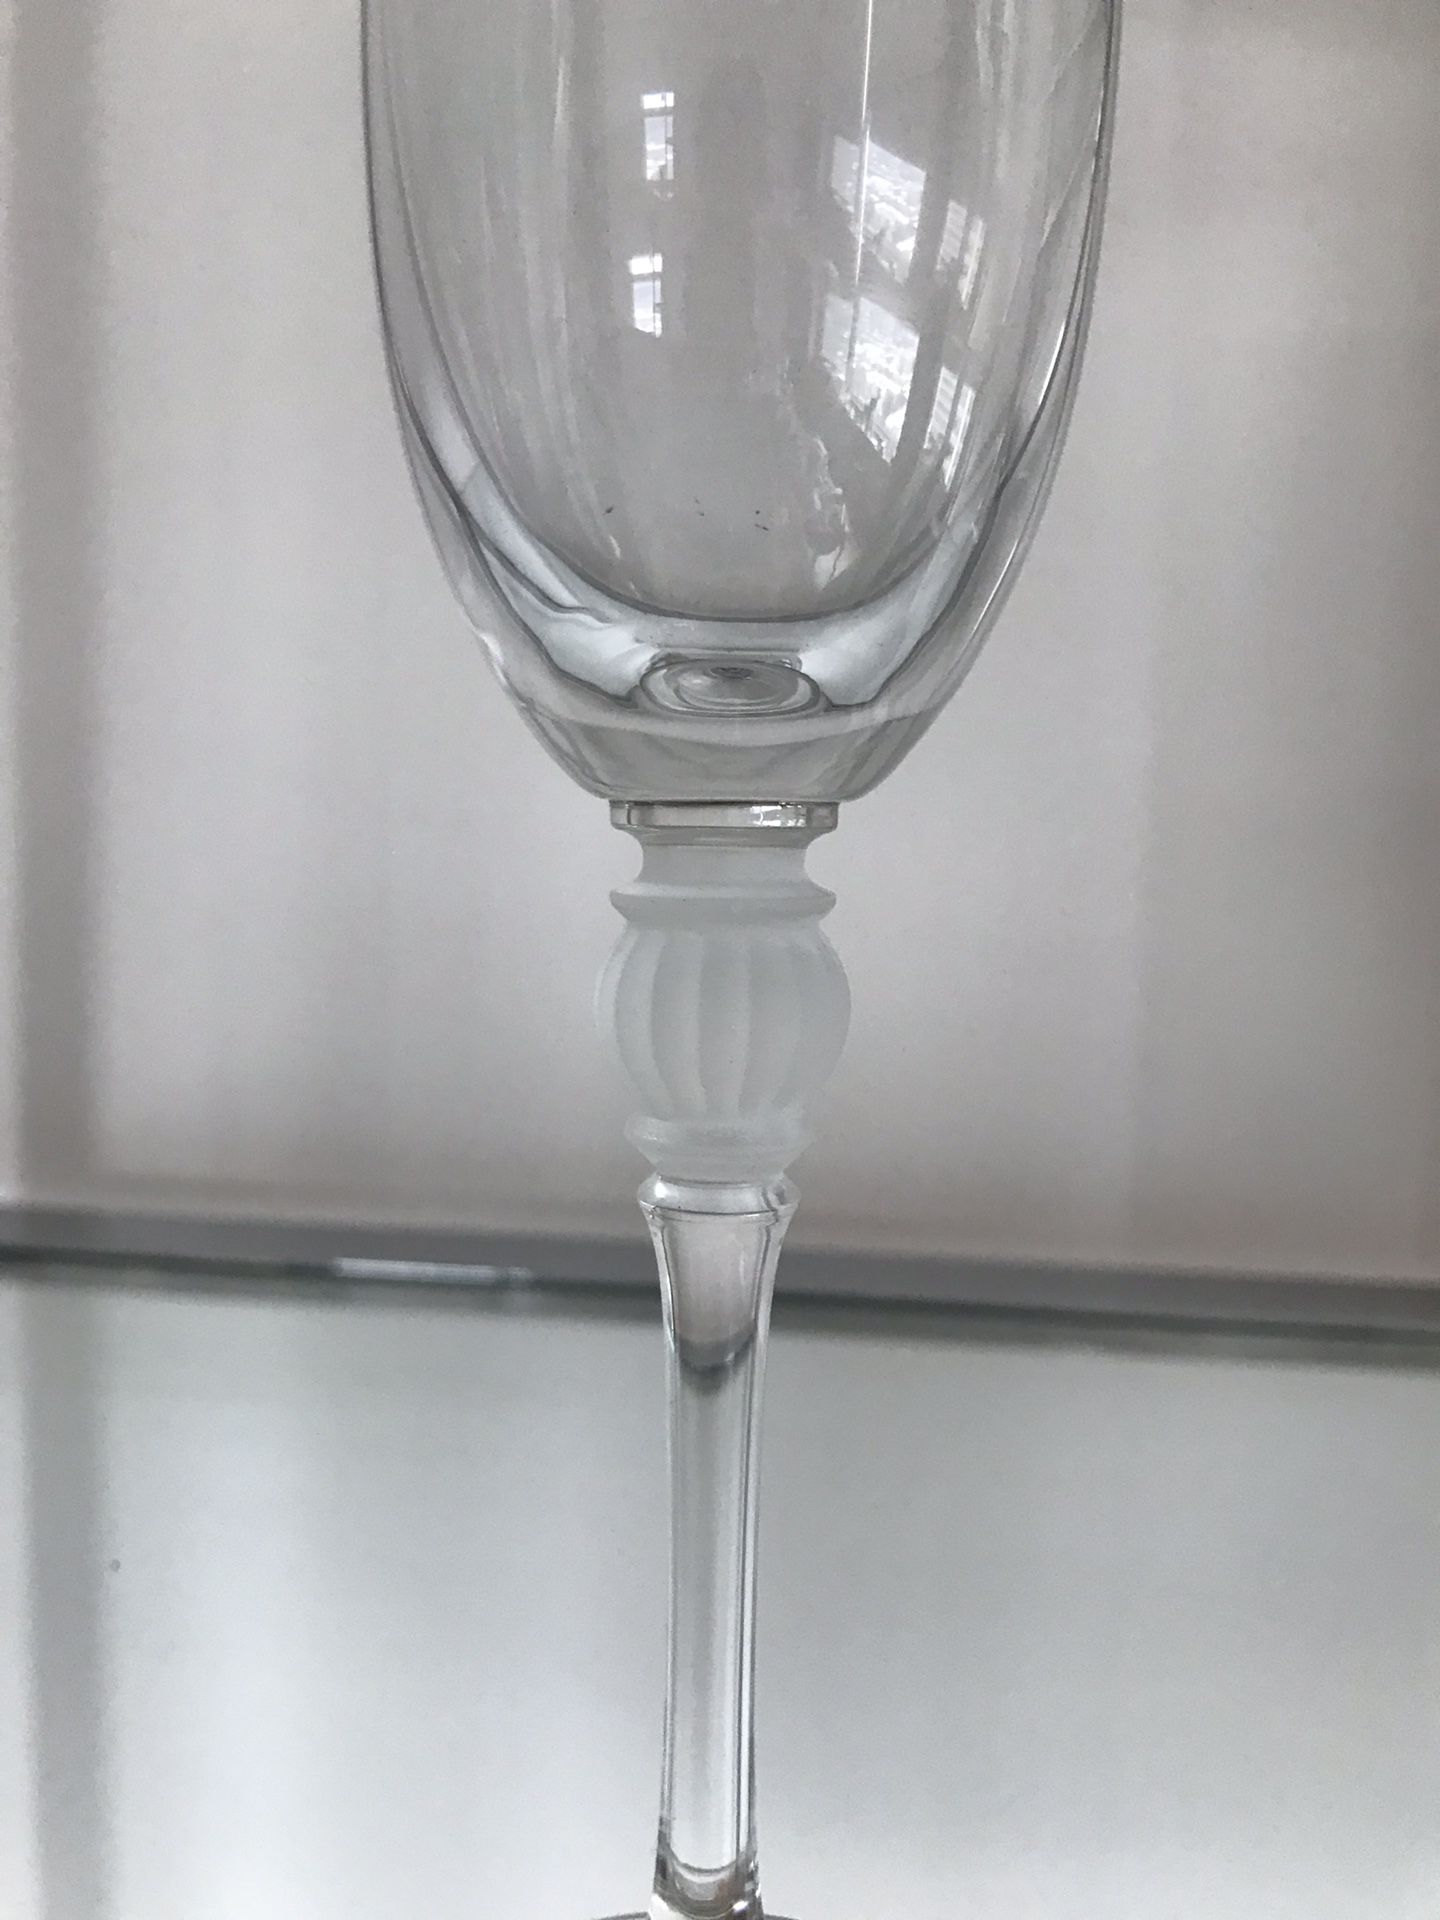 Crystal Champagne flute glasses set of 4. 24% lead crystal